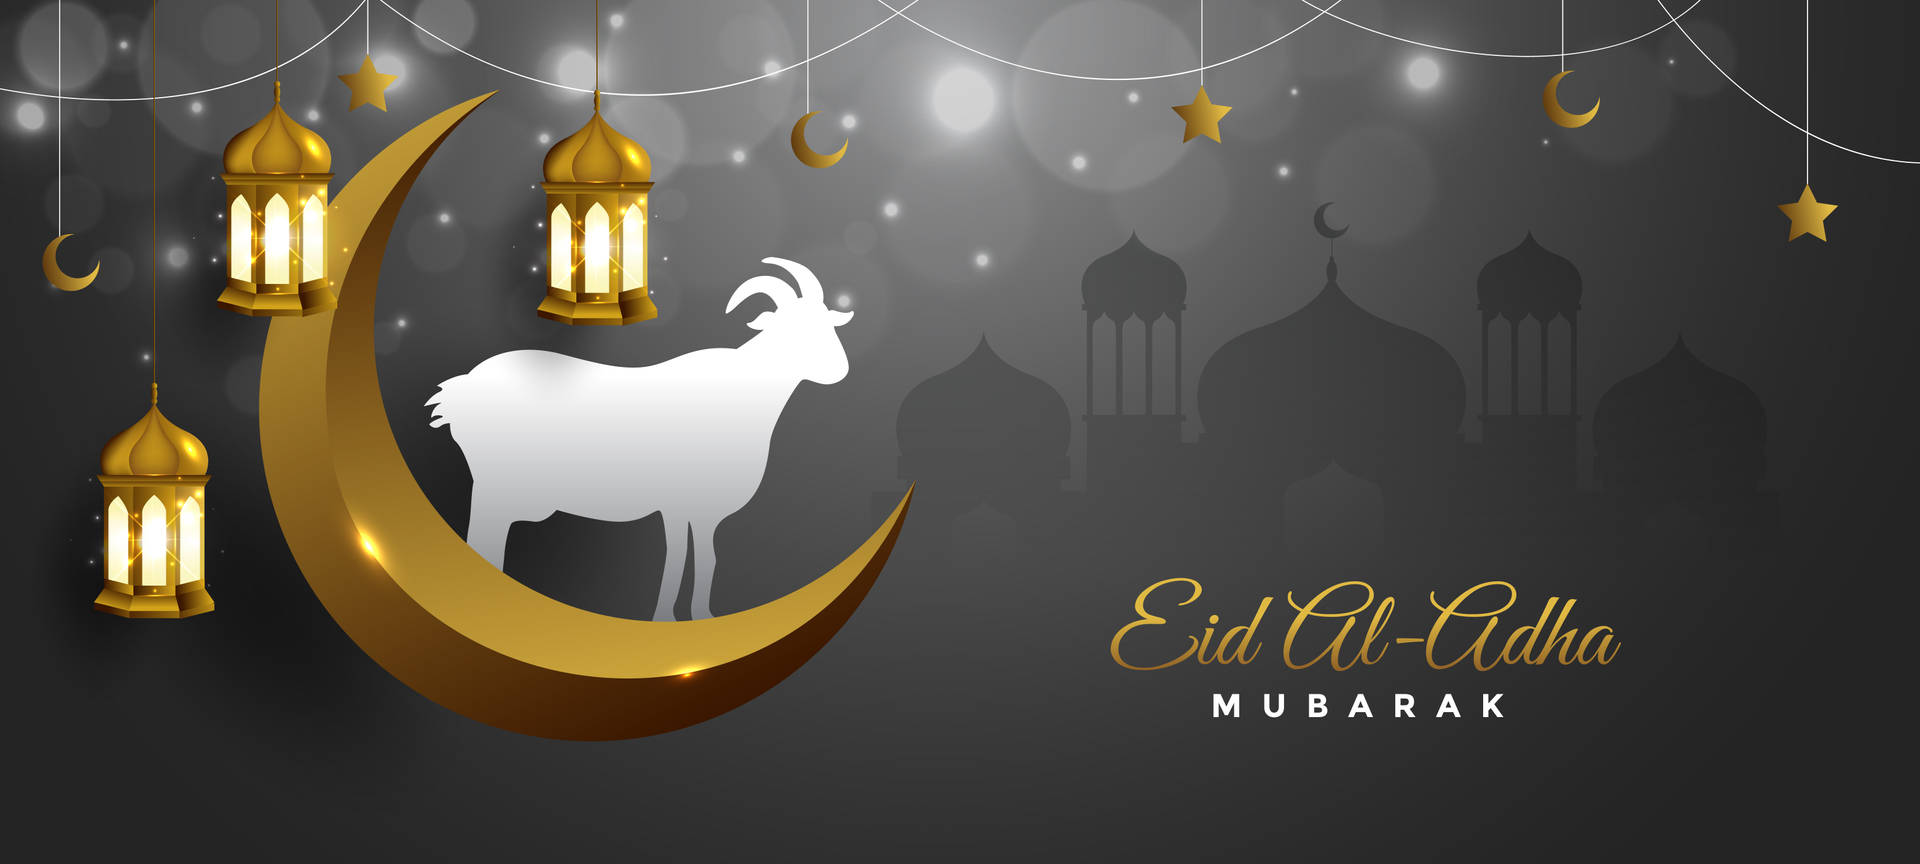 Celebrating Eid Mubarak With Traditional Lanterns Wallpaper